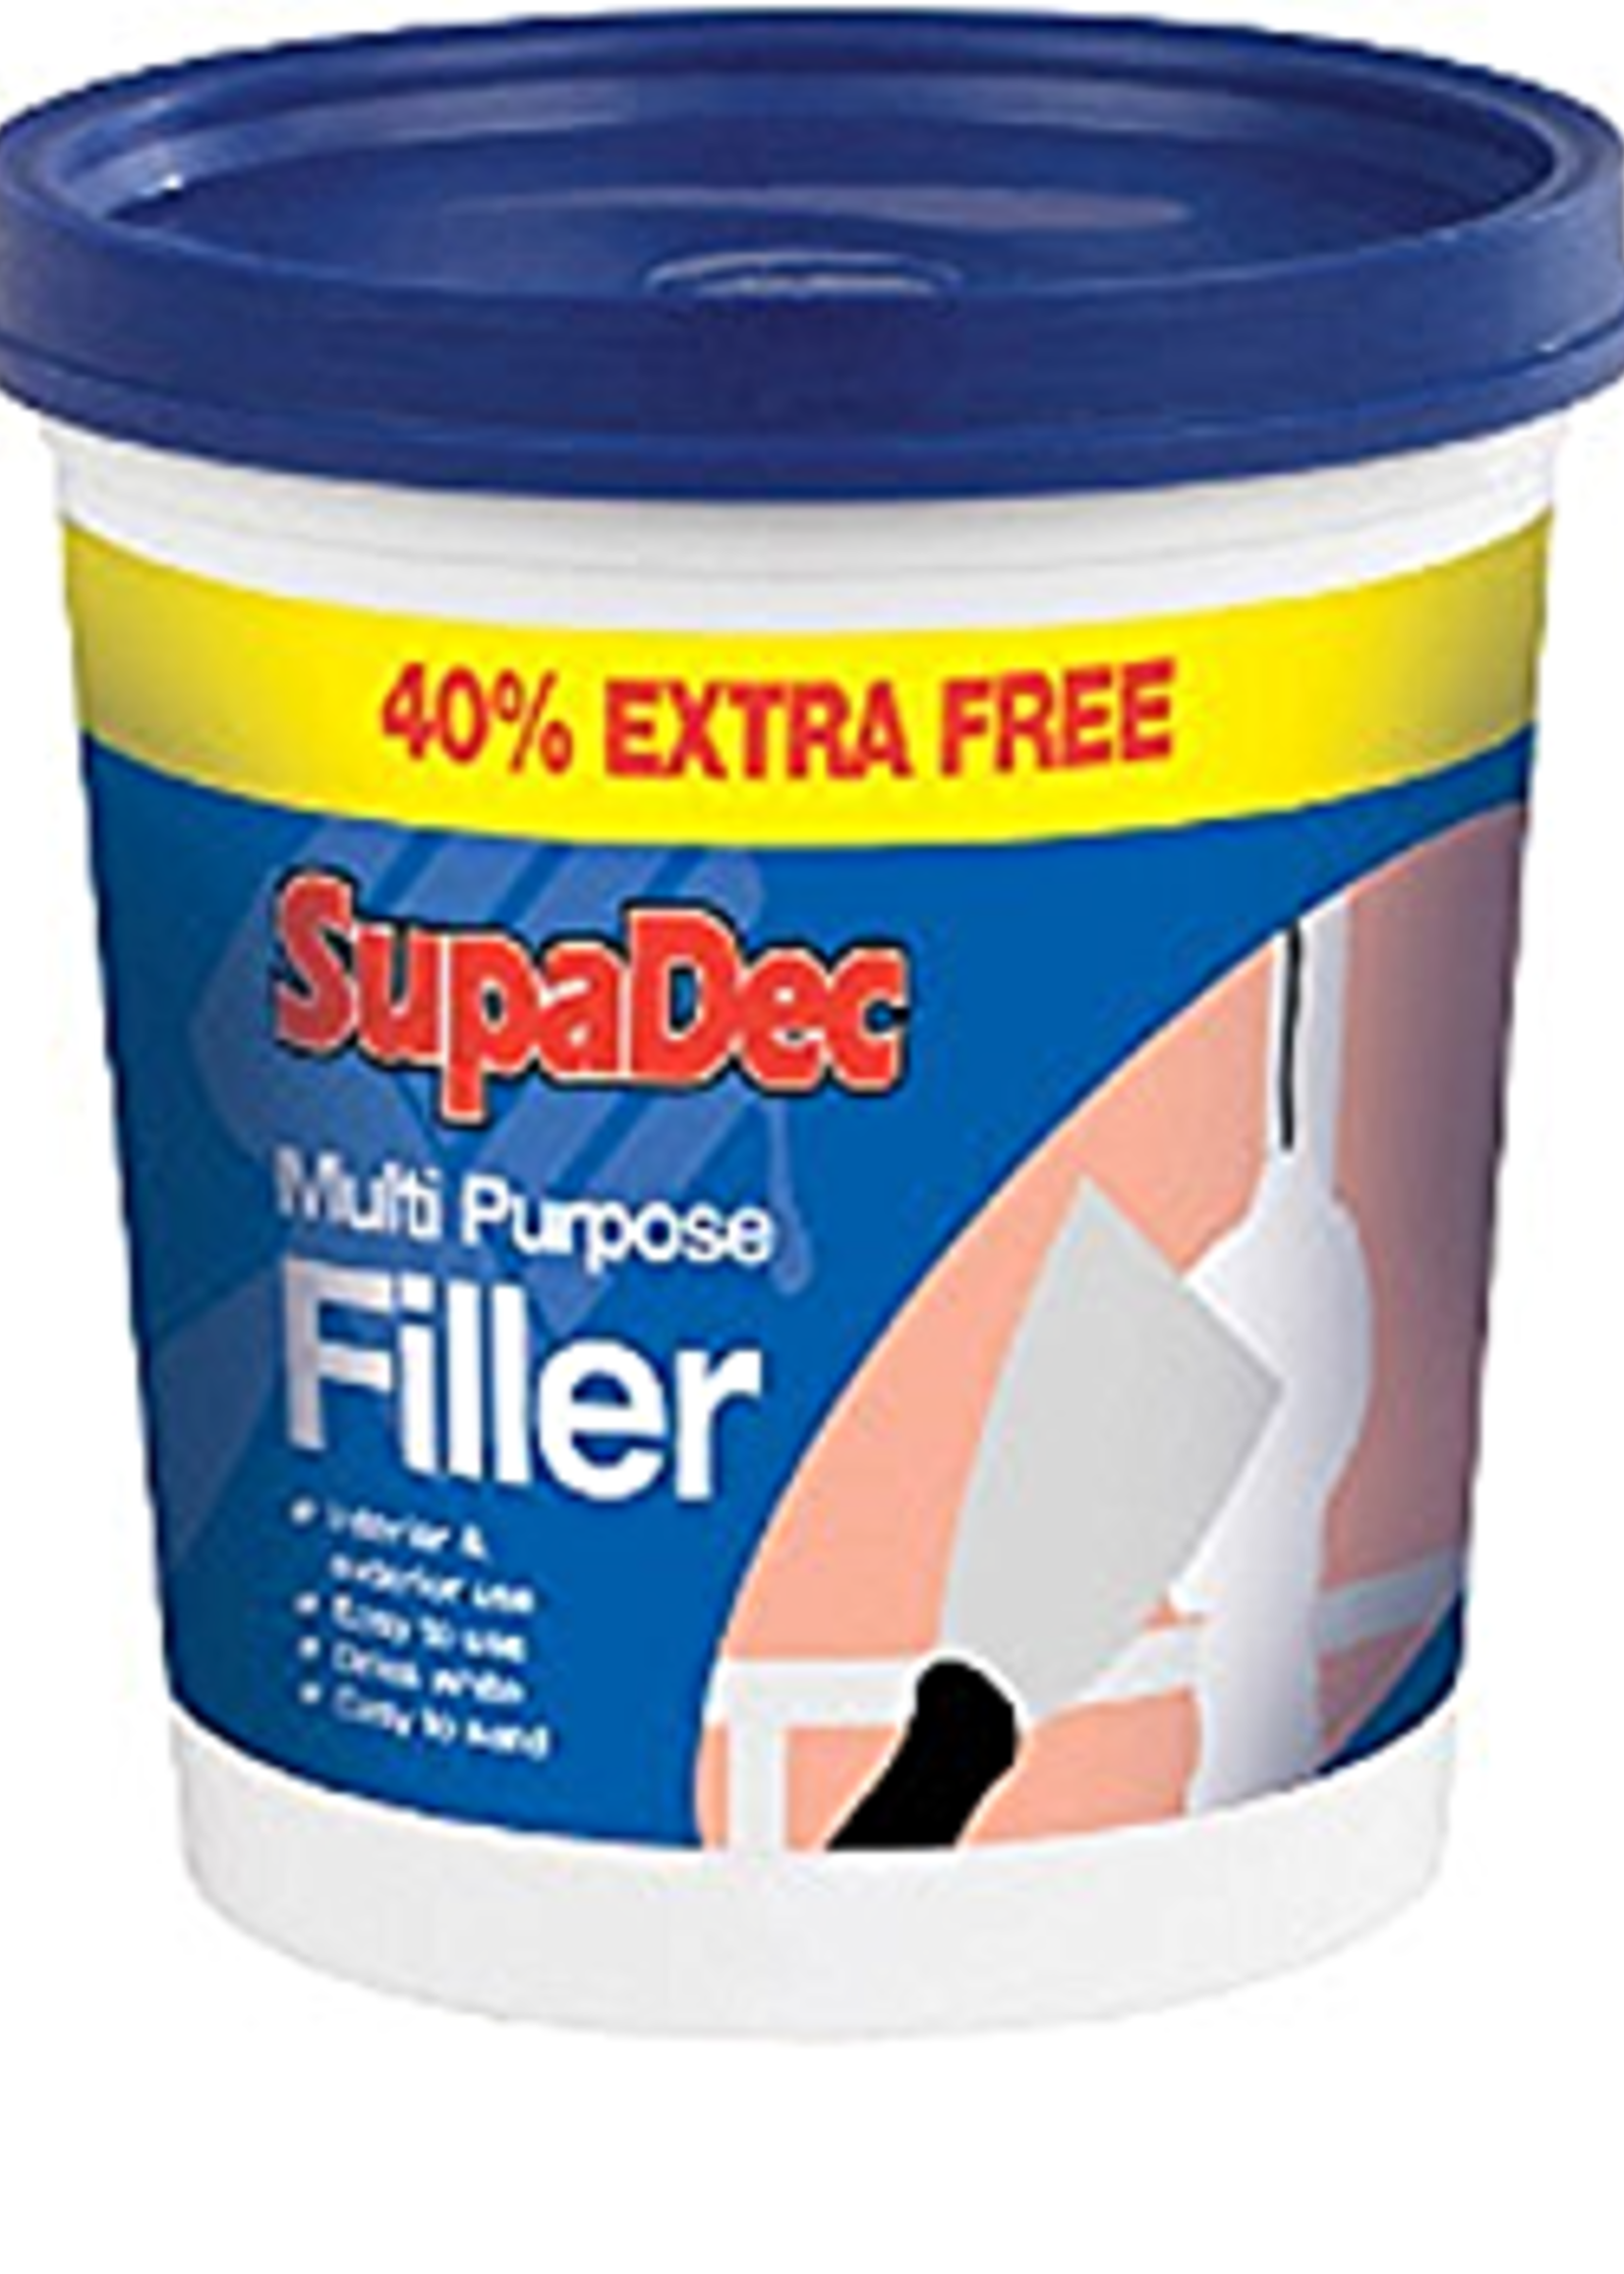 SupaDec SupaDec Multi Purpose Ready Mixed Filler 1kg